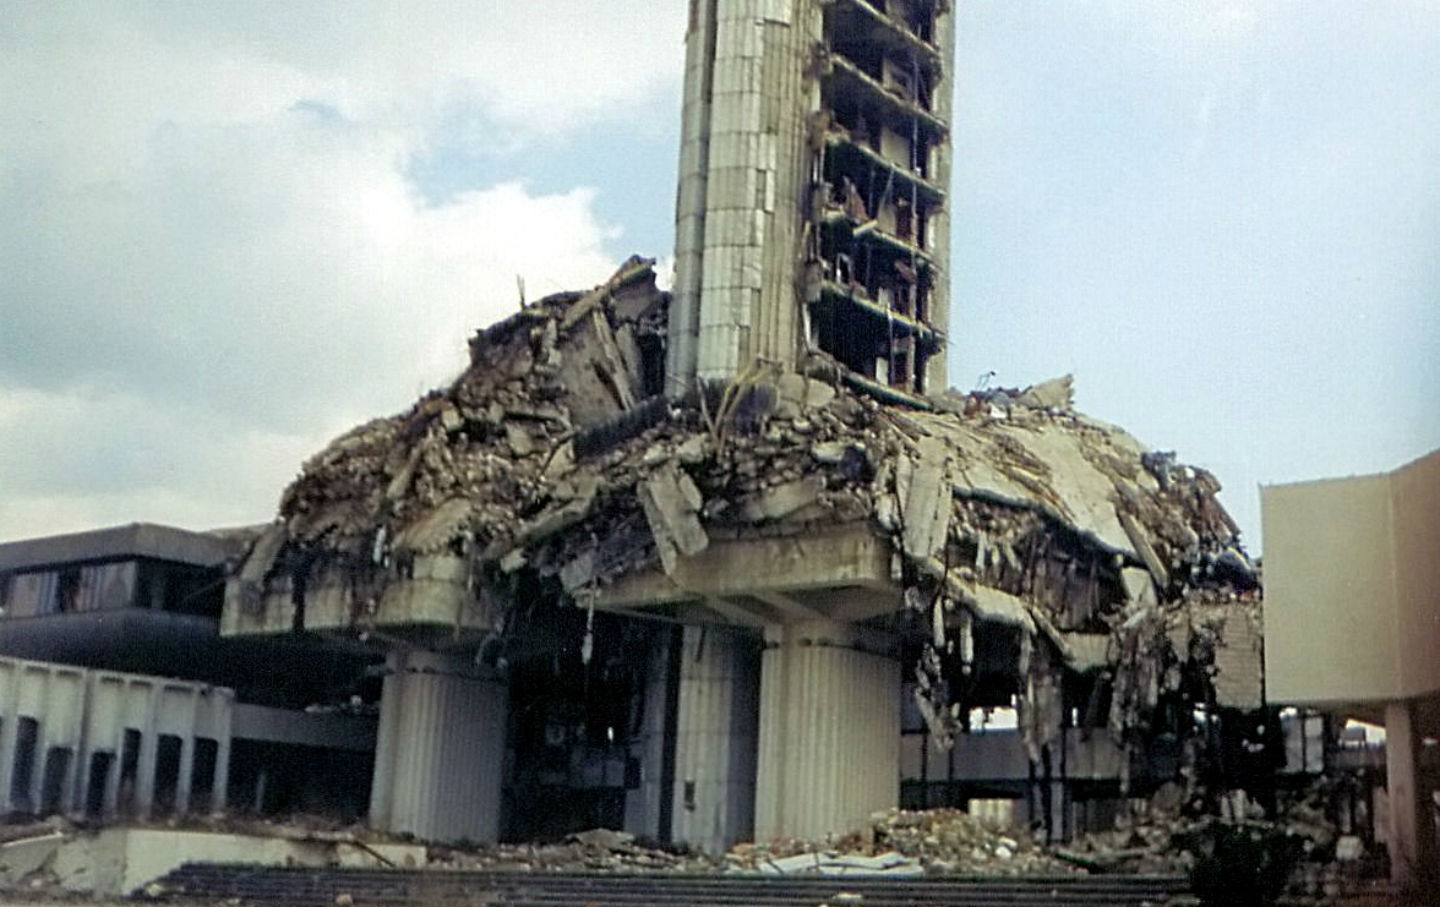 April 5, 1992: The Siege of Sarajevo Begins